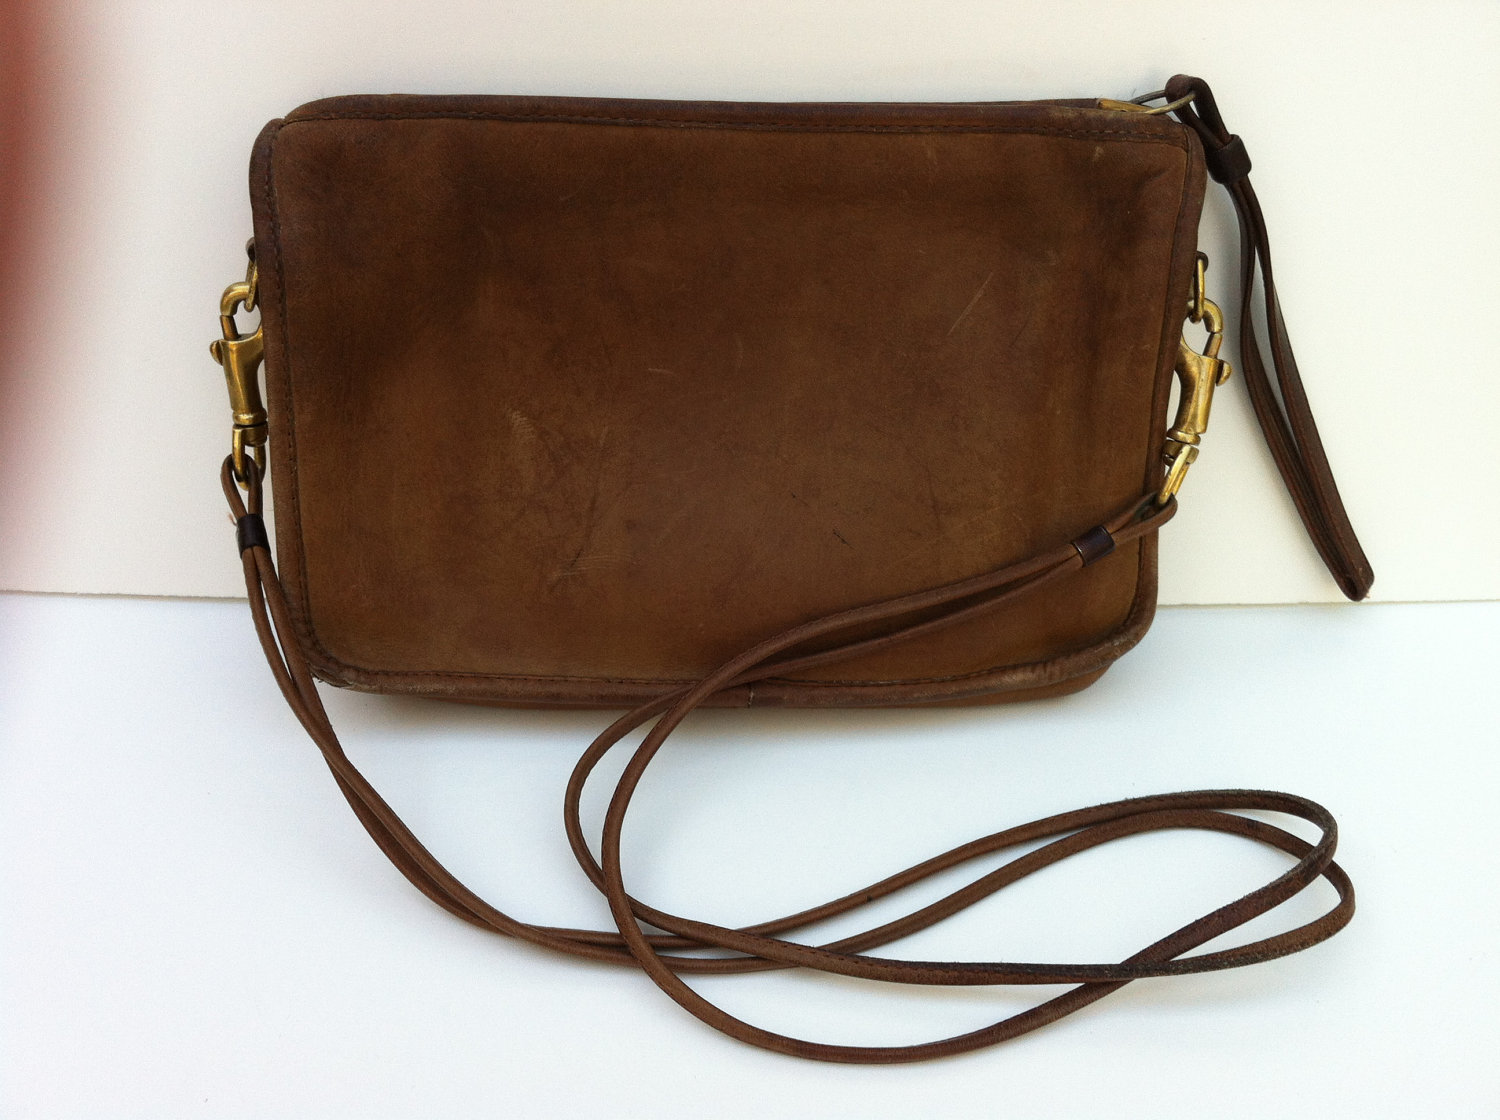 Vintage Coach Leather Handbag